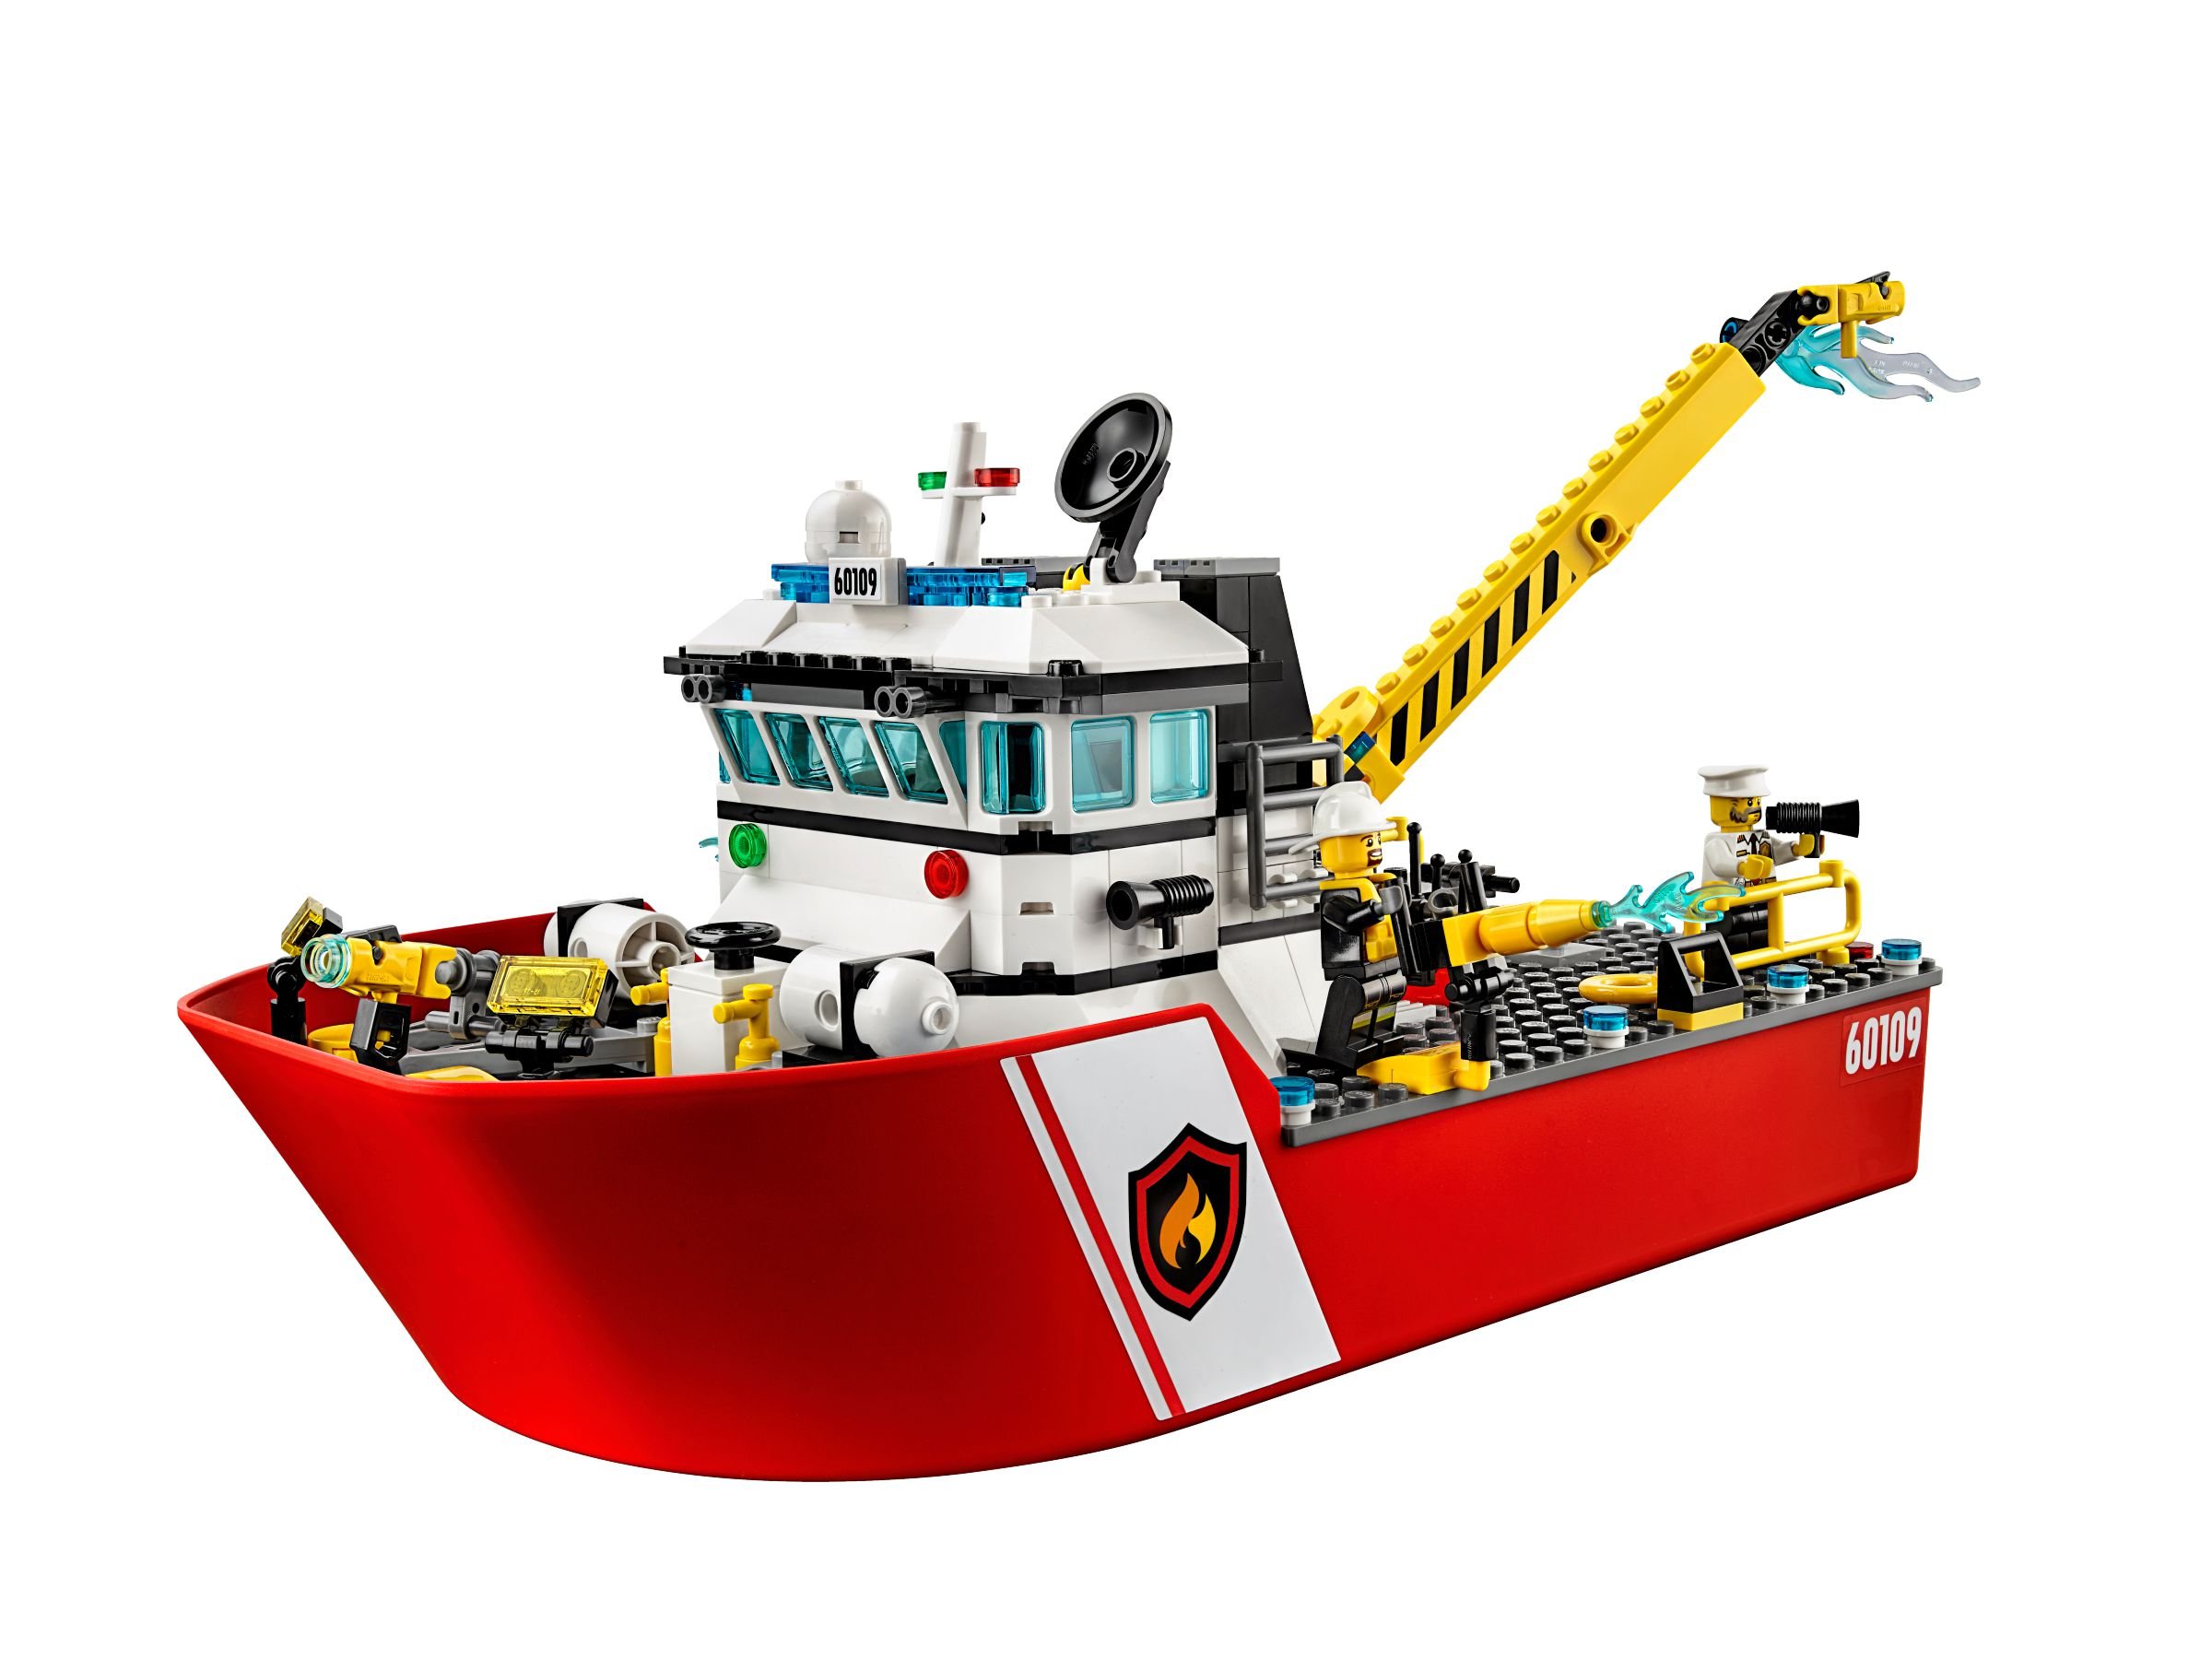 LEGO City 60109 Feuerwehrschiff LEGO_60109_alt2.jpg